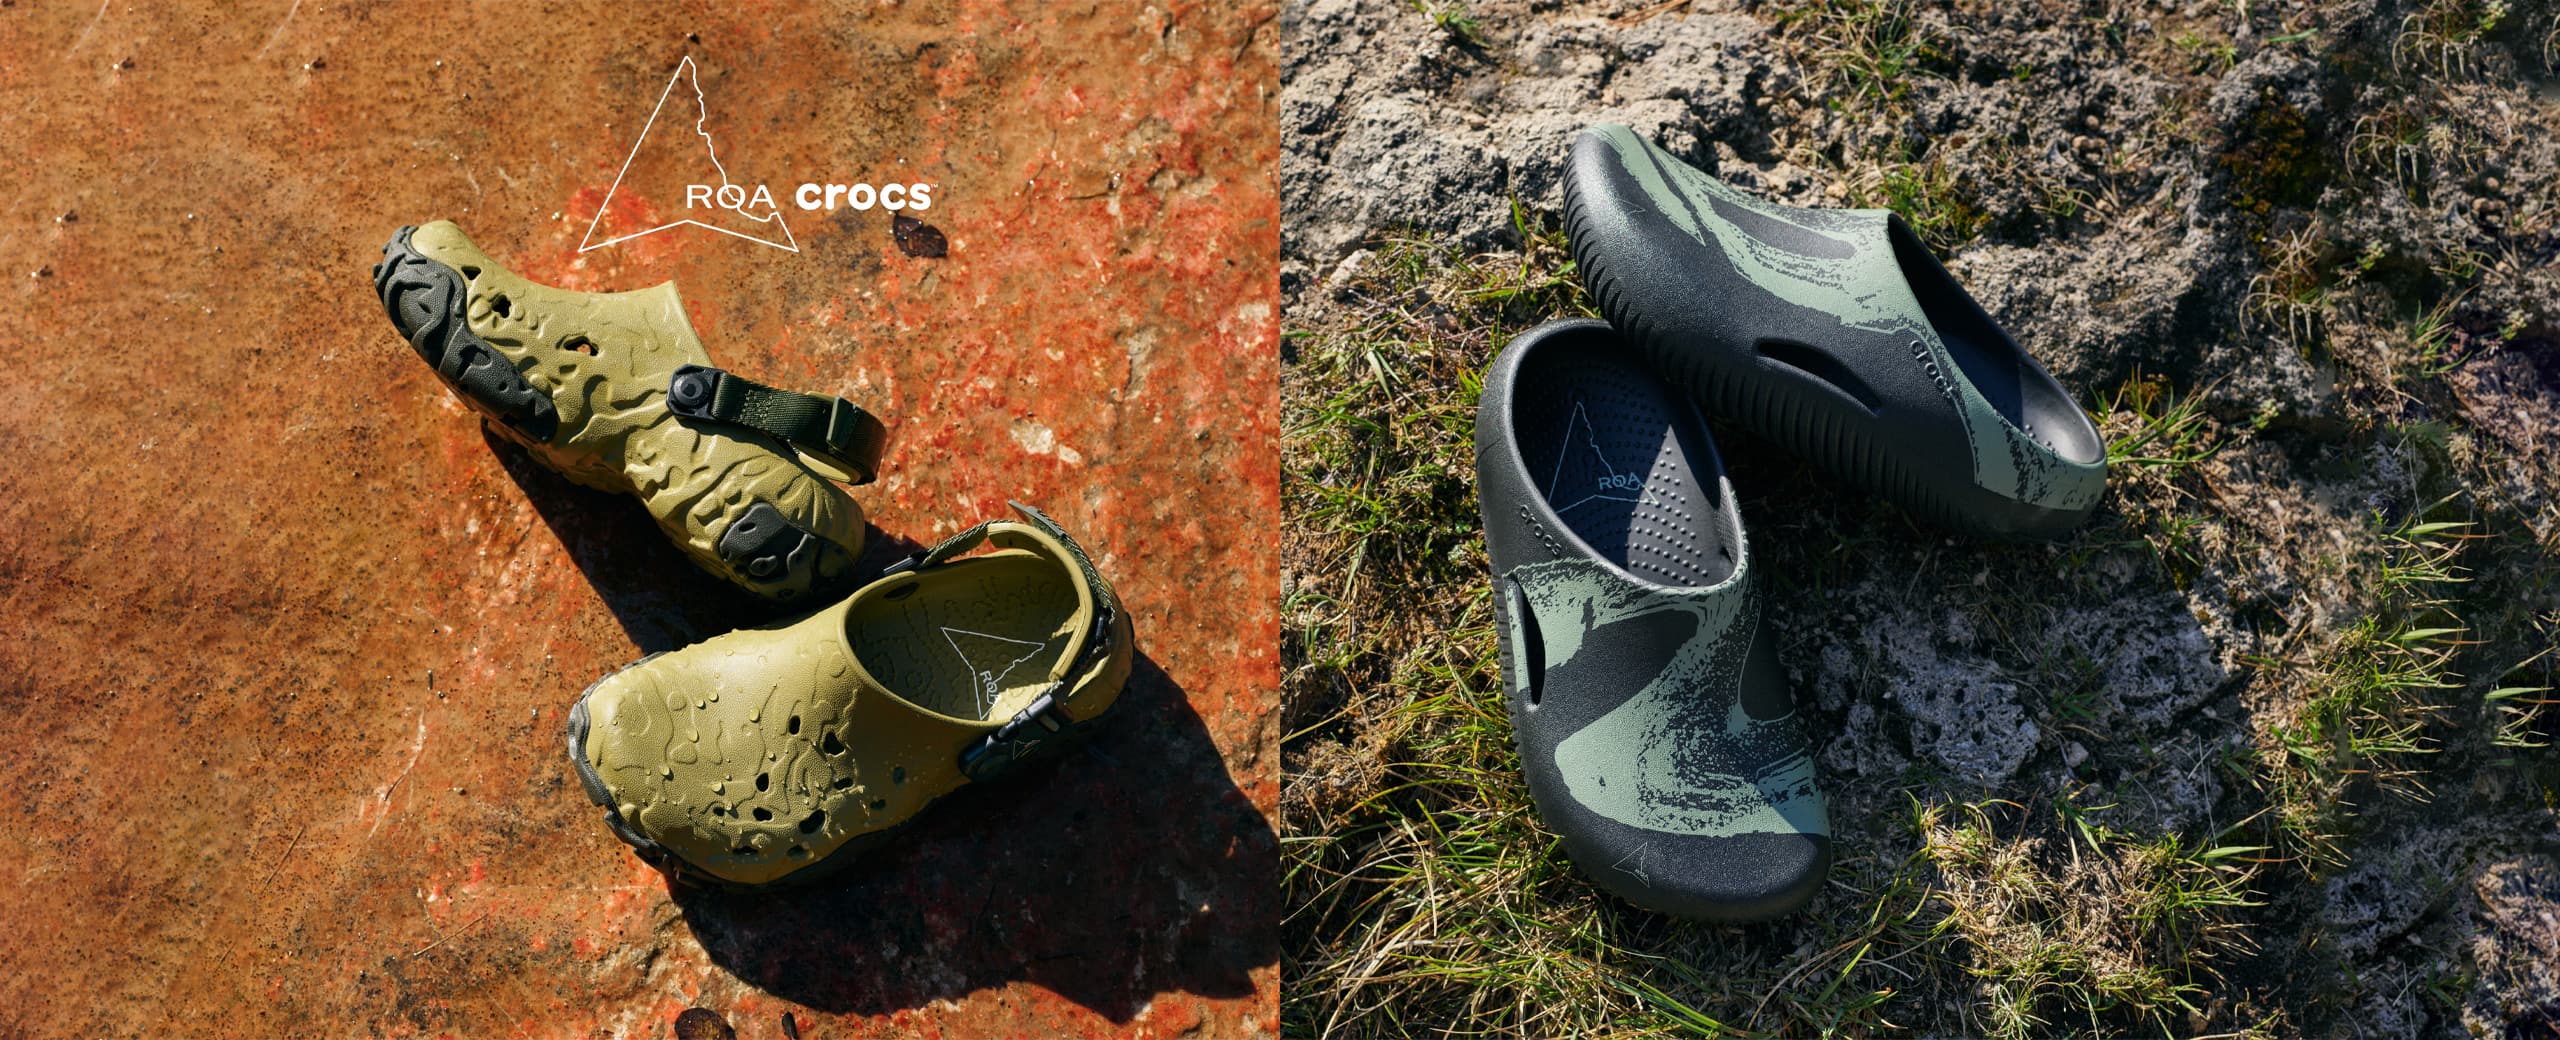 "ROA X Crocs Collection"